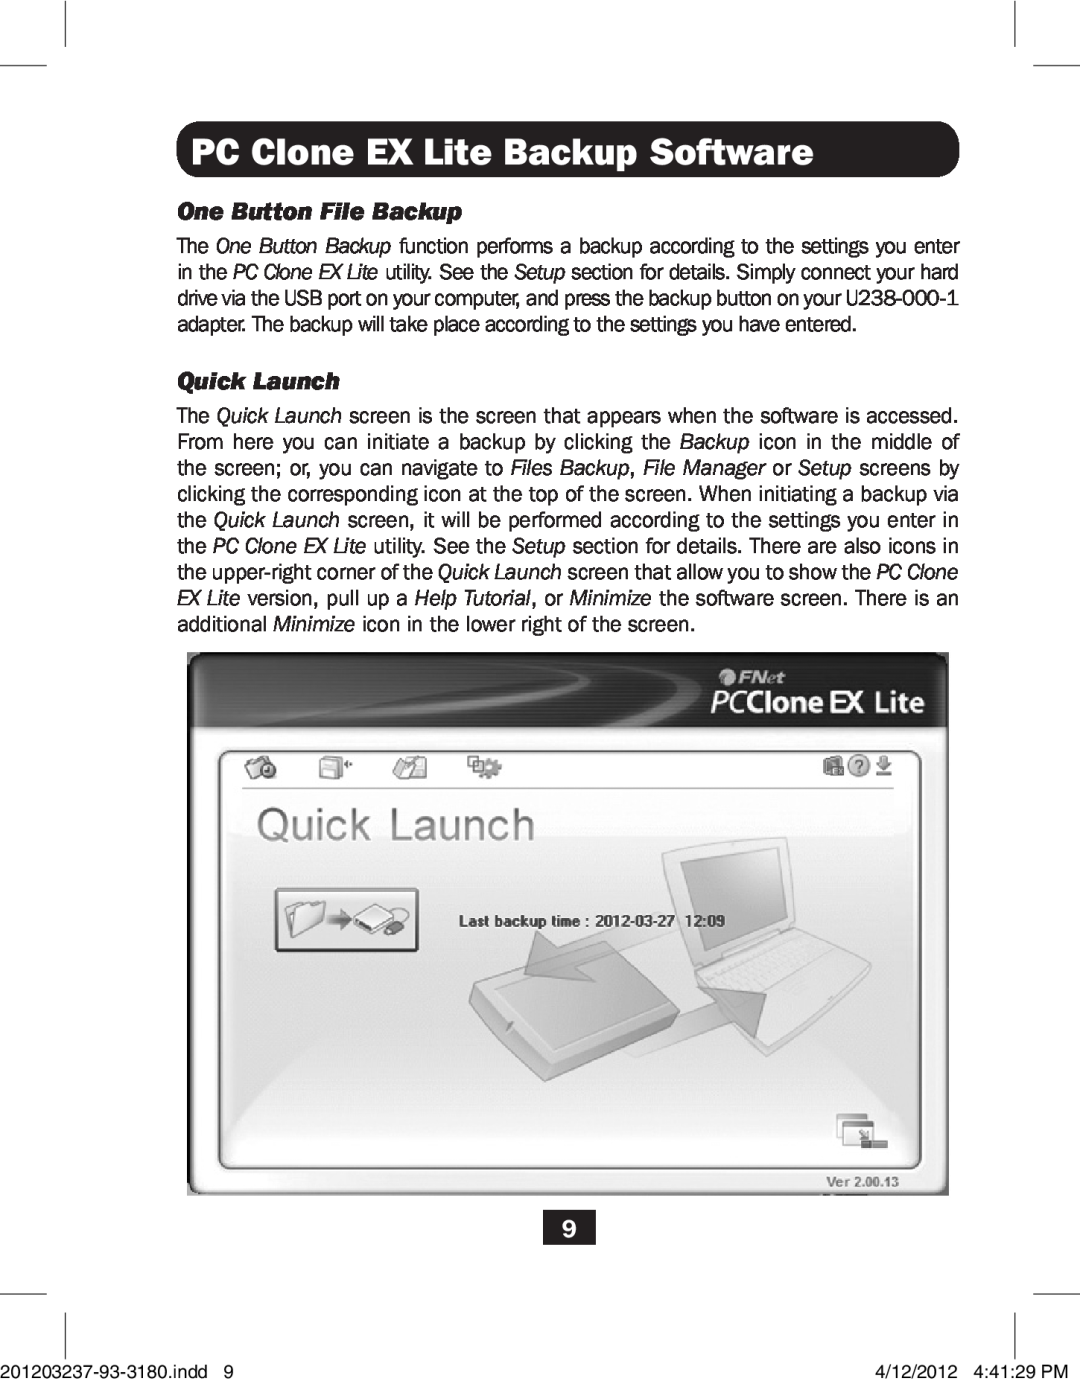 Tripp Lite U238-000-1 owner manual One Button File Backup, Quick Launch, PC Clone EX Lite Backup Software 